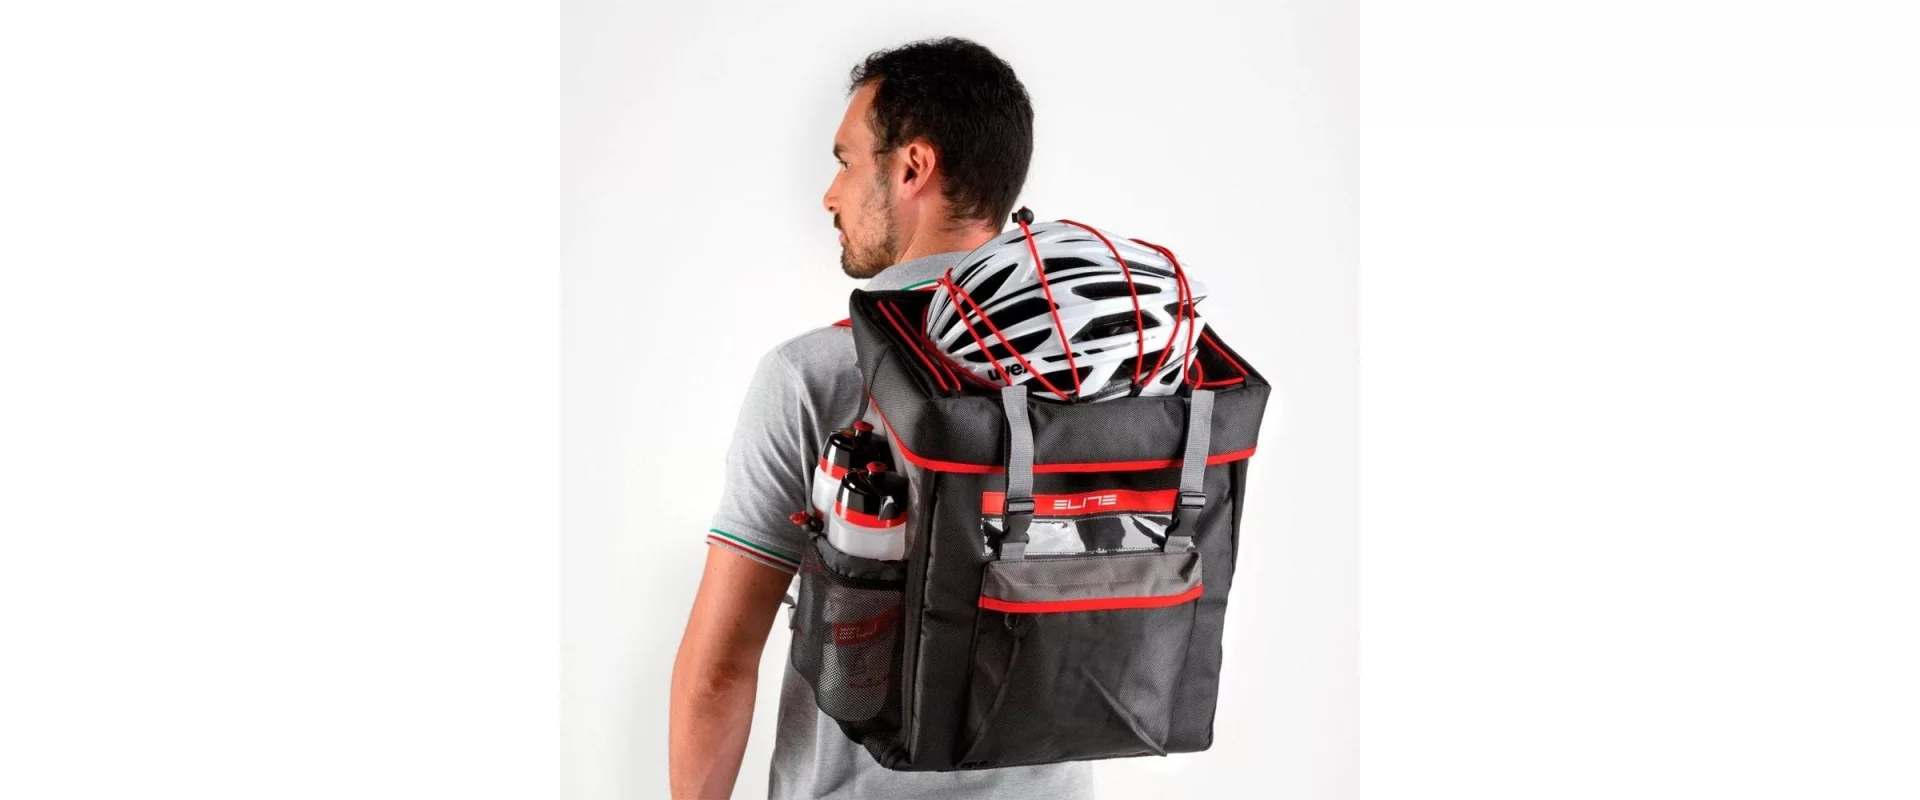 Elite Tri Box Bag For Triathlon Accessories Storage / Рюкзак